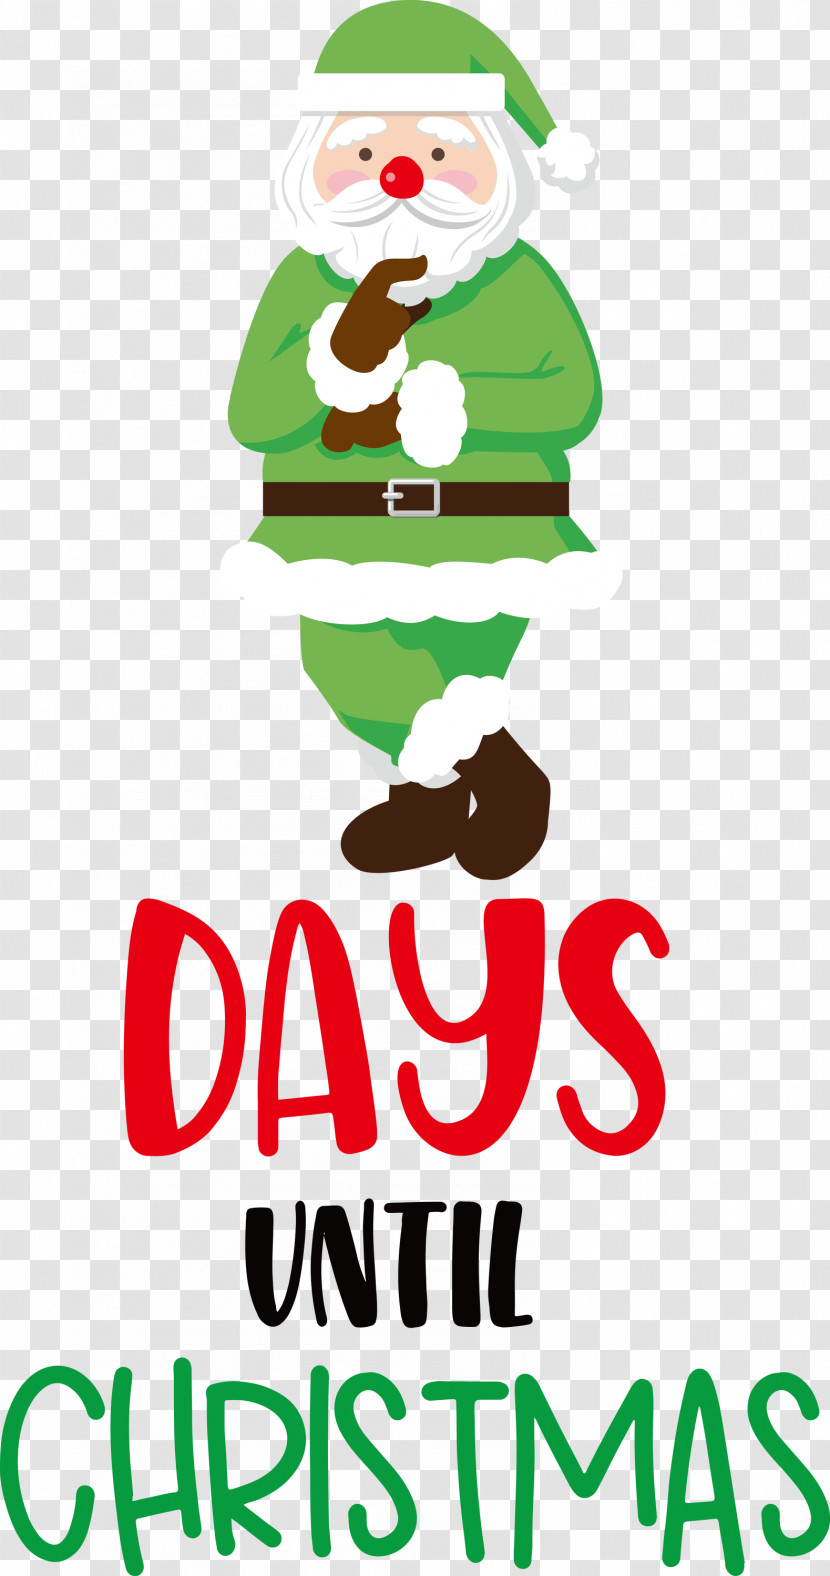 Days Until Christmas Christmas Santa Claus Transparent PNG